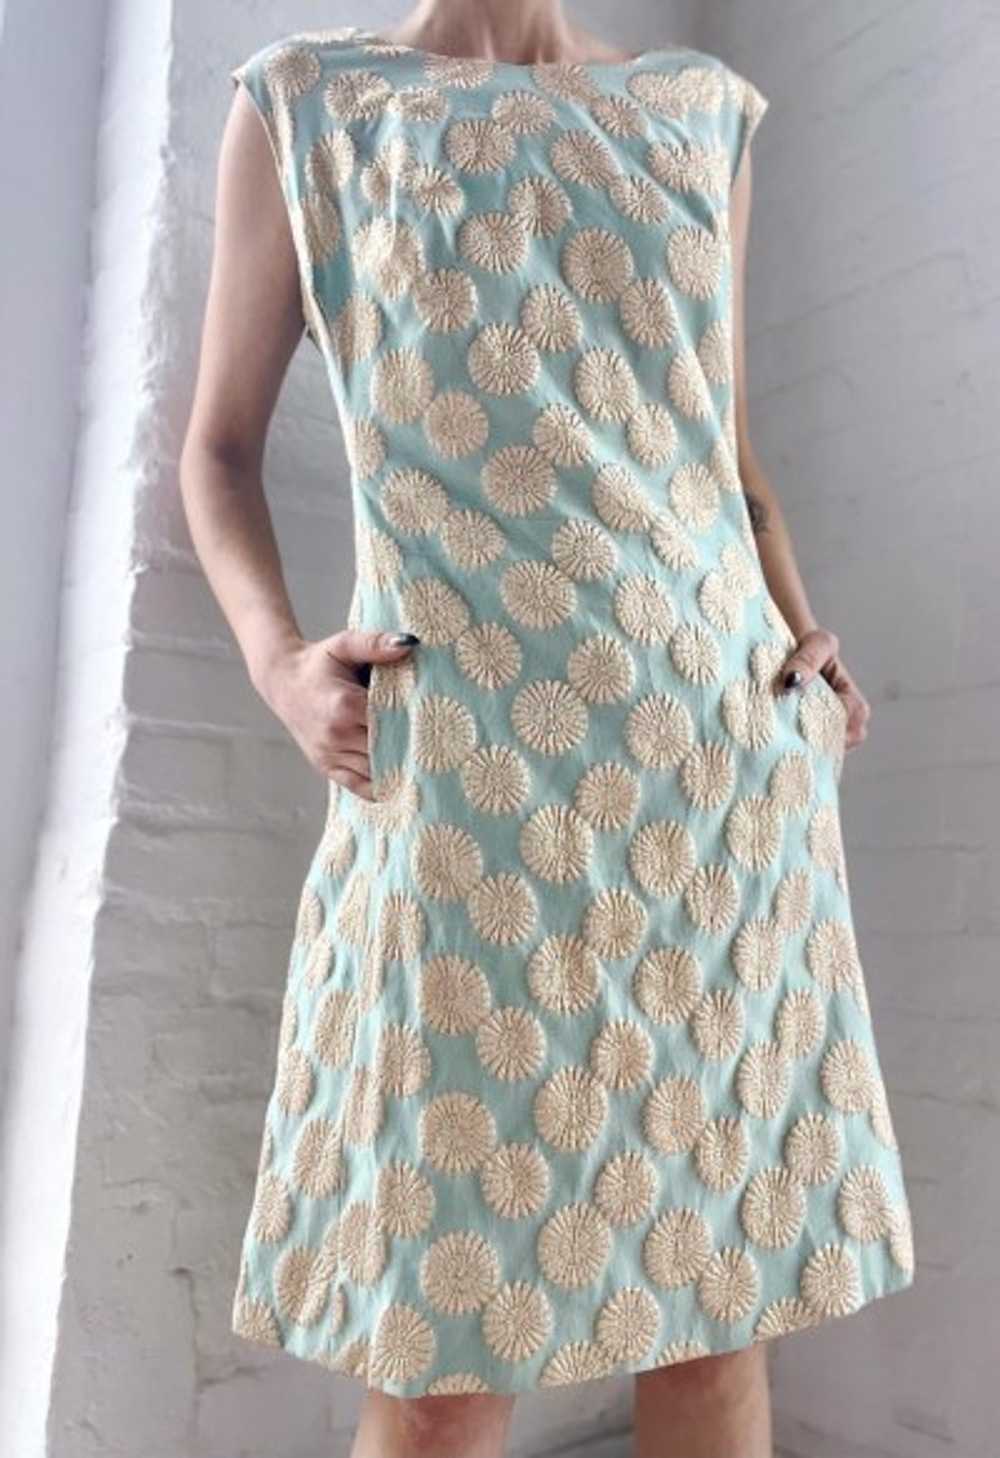 60s brocade dress - image 3